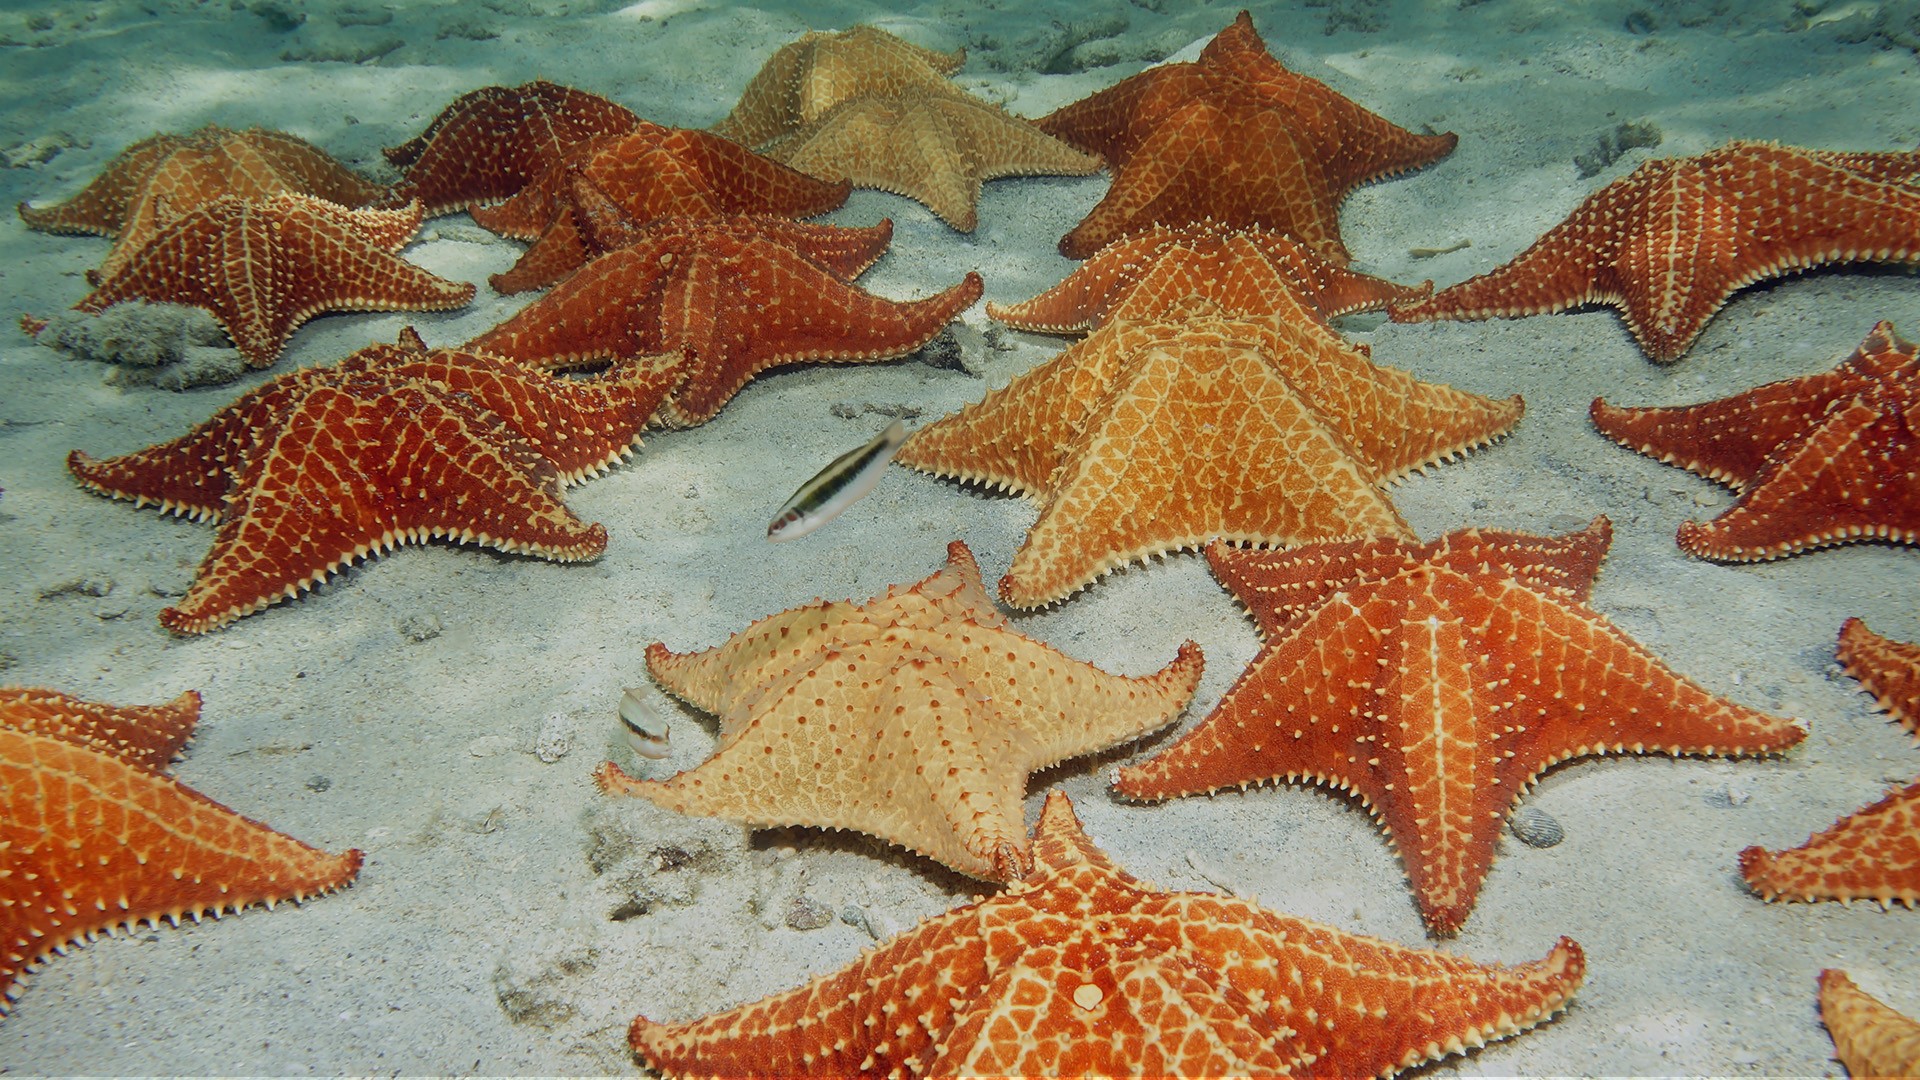 Red cushion sea stars on sandy ocean floor, Dominican Republic